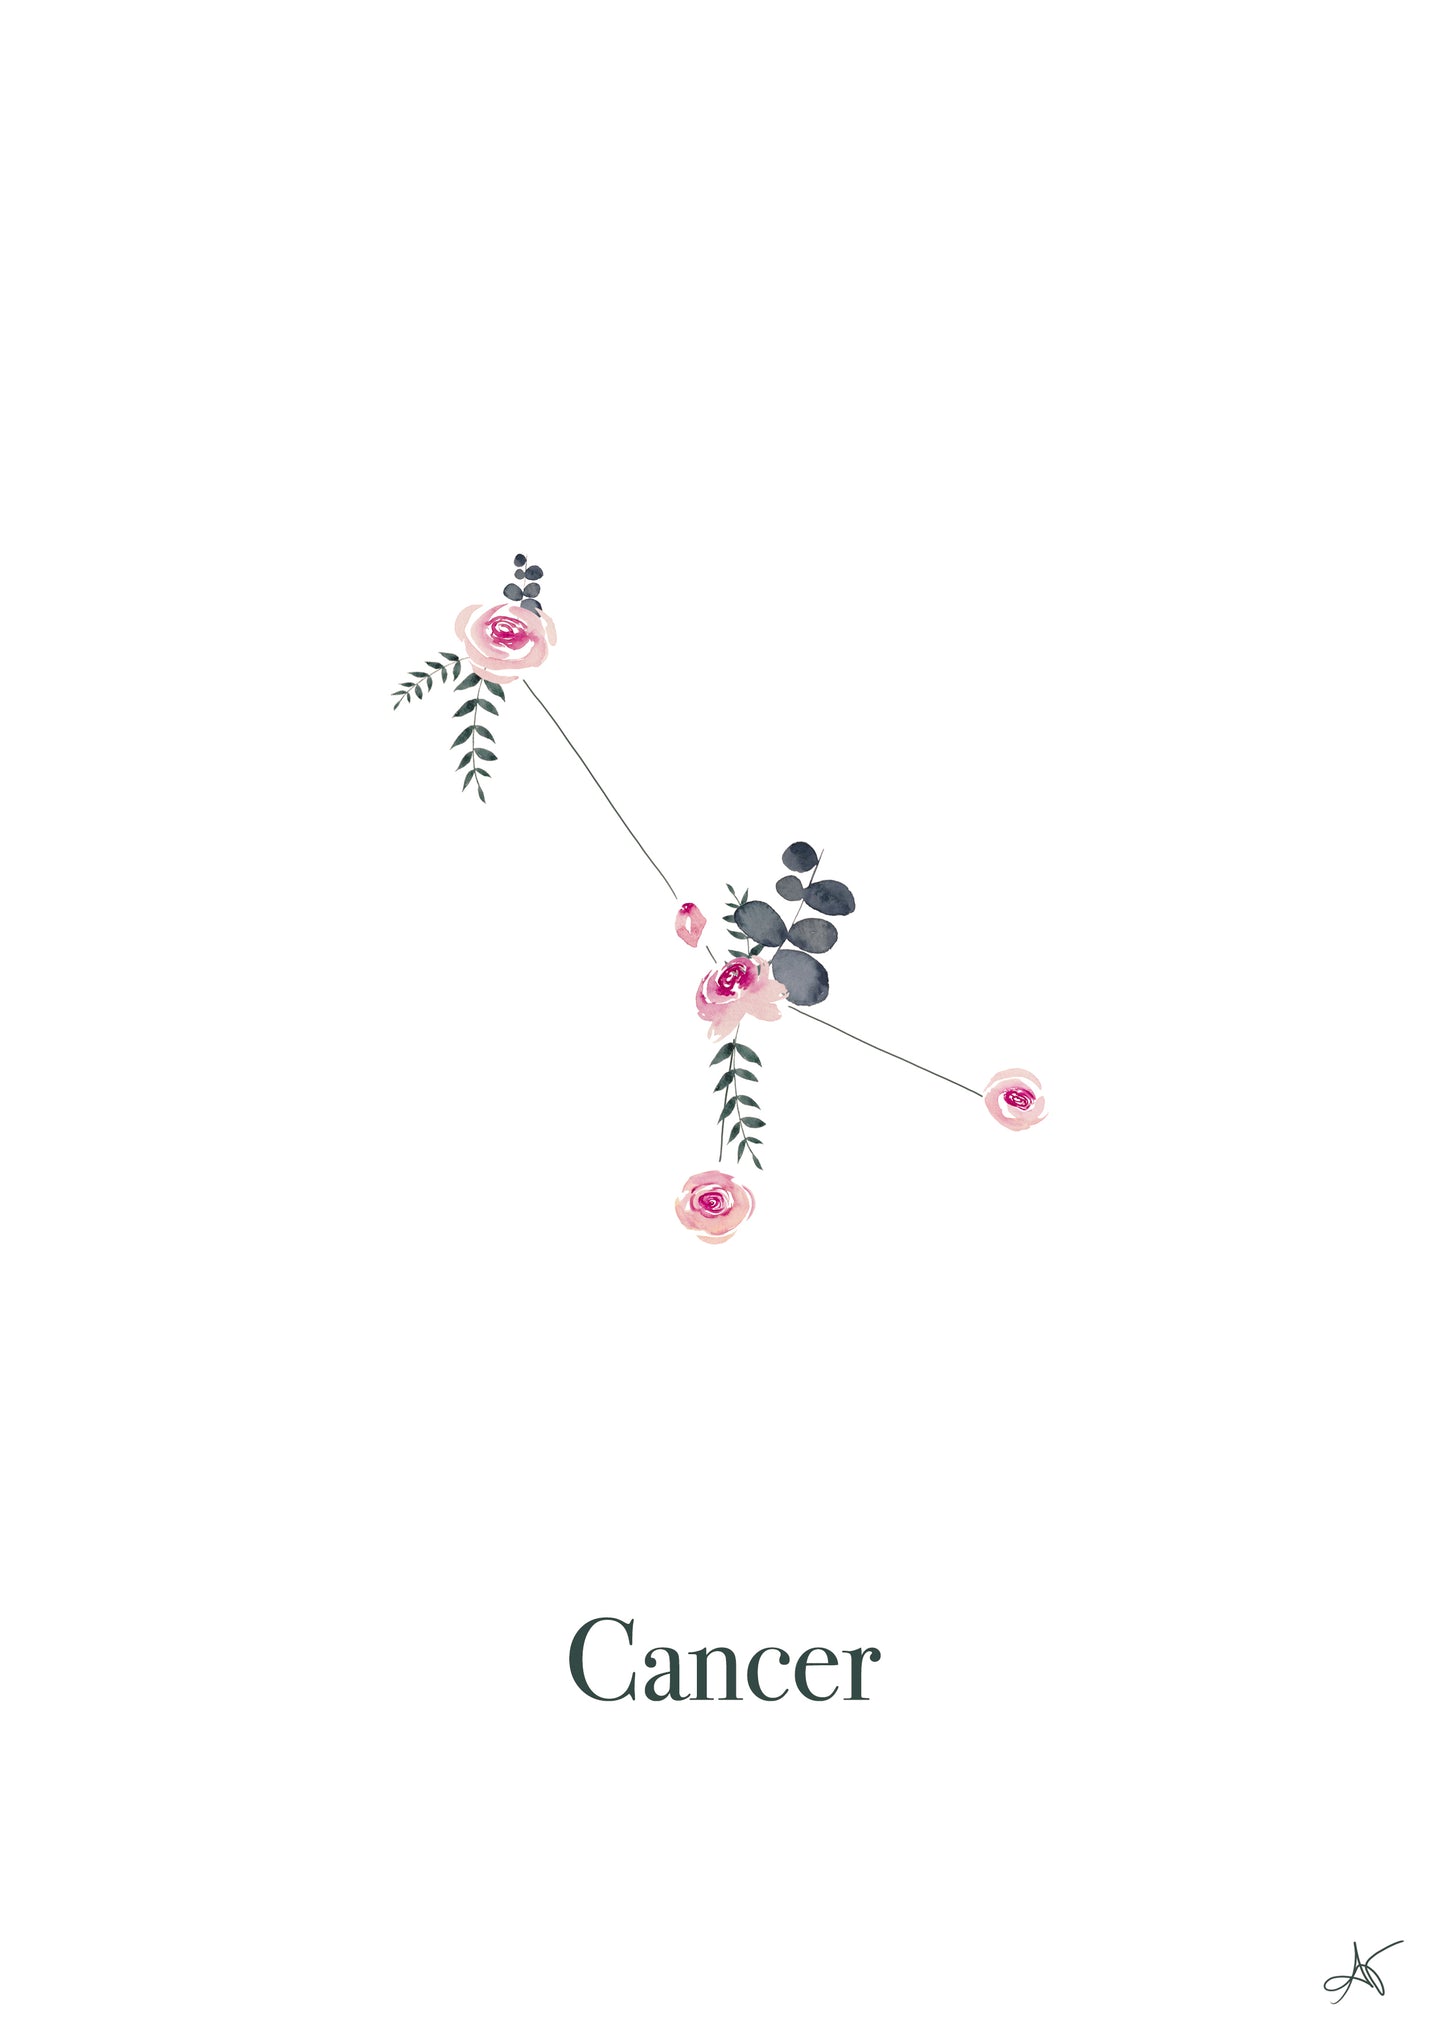 "Cancer" - Roses